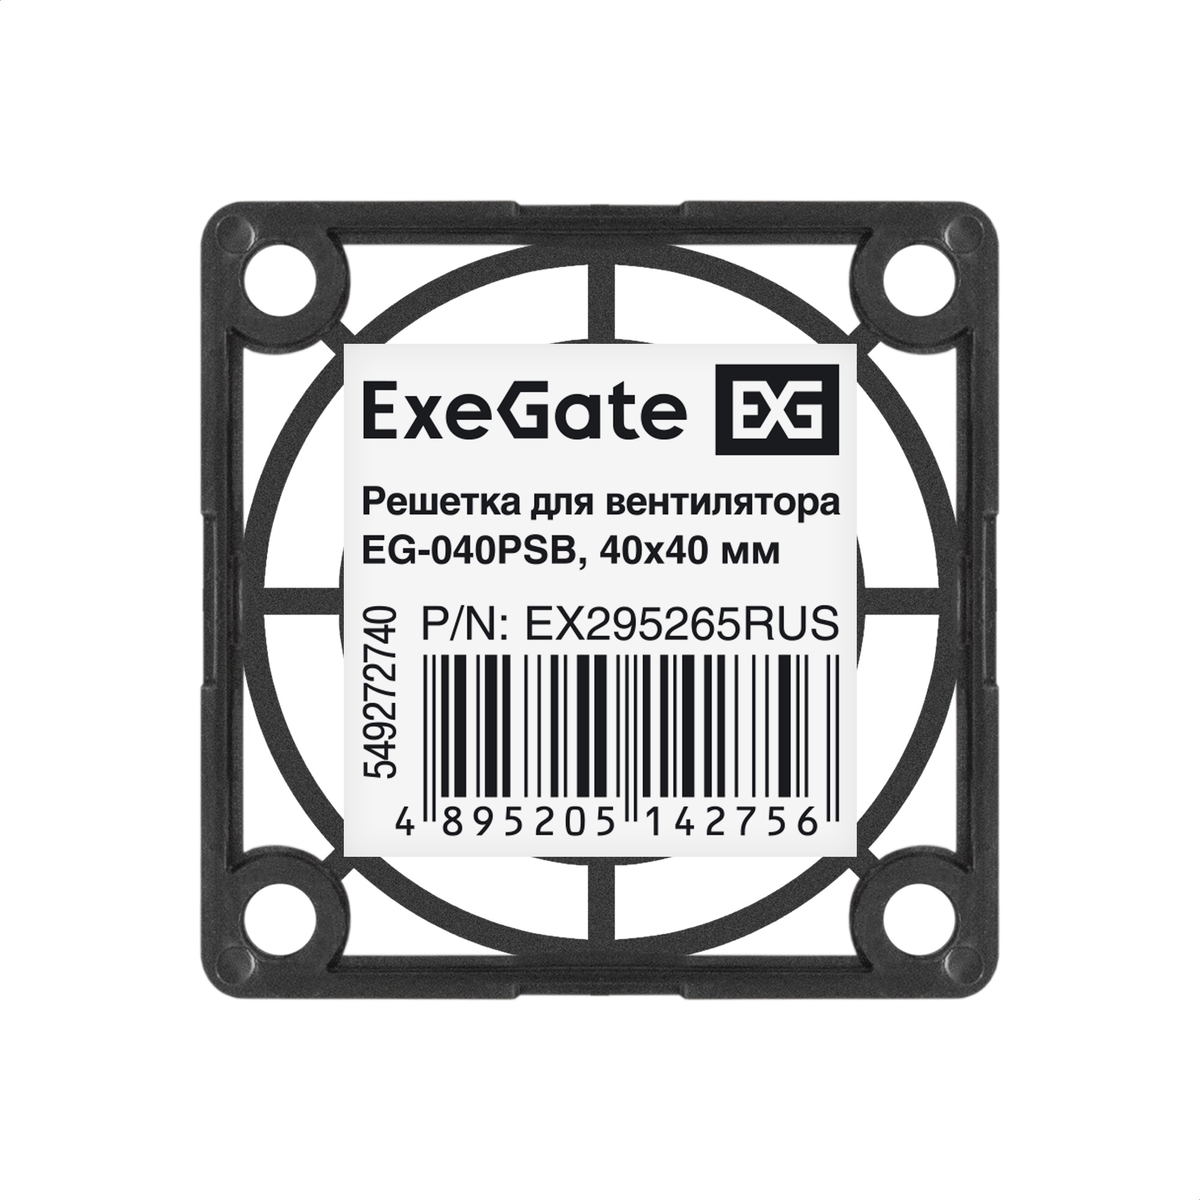 Grid 40x40 ExeGate EG-040PSB